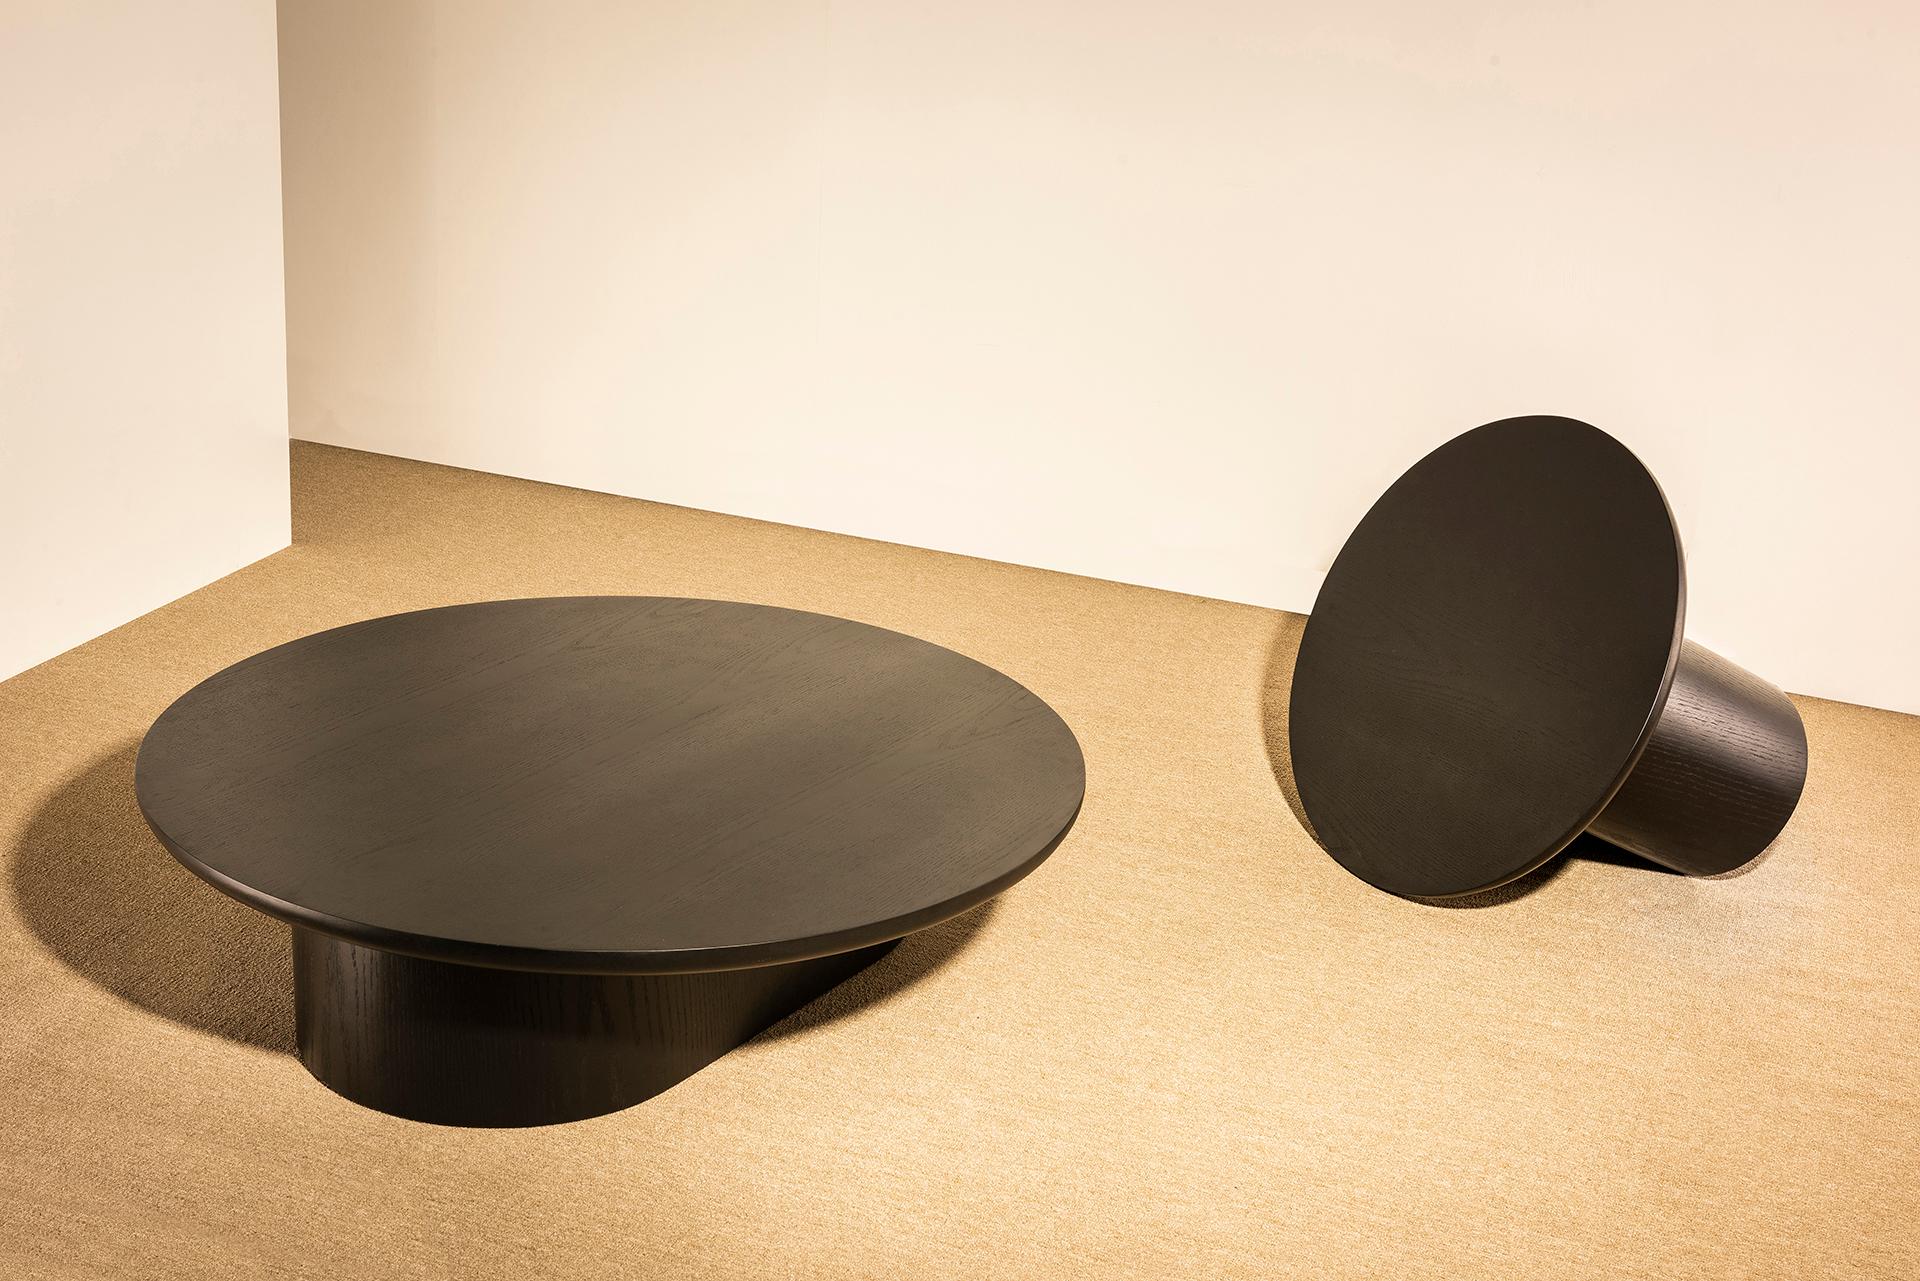 International Style Porto Set Center Table, by Rain, Contemporary Center Table, Laminated Oakwood